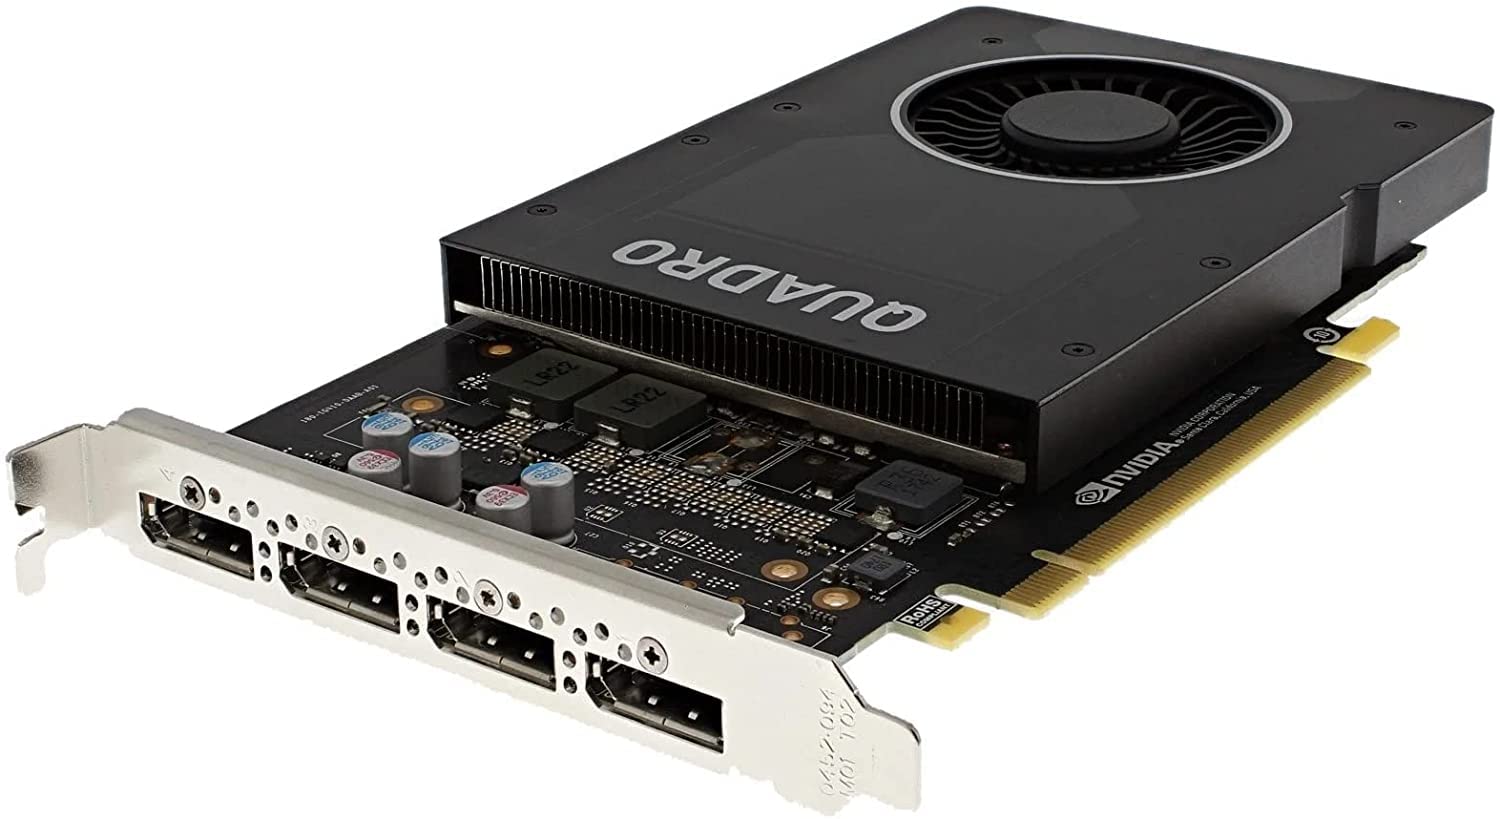 Nvidia Quadro P2000 5GB GDDR5 Single-Slot Graphics Card - 1024 CUDA Cores,  3.0 TFLOPS, 160bit, 140GB/s, 4 x DisplayPort 1.4, 75W Power Consumption, ...